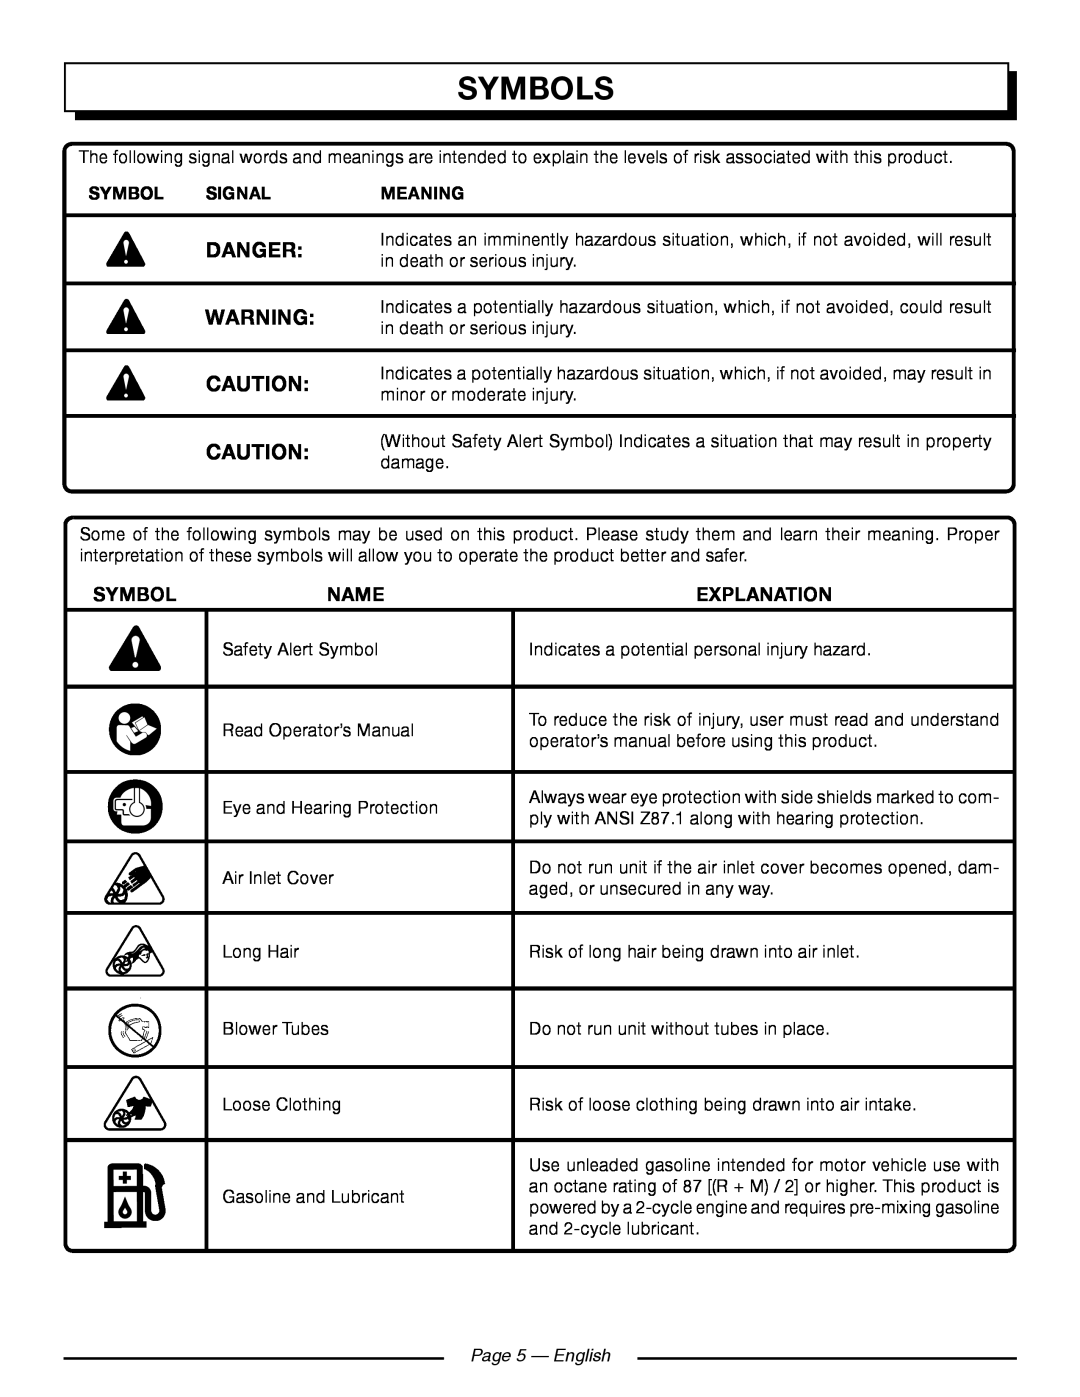 Homelite UT09521 manuel dutilisation Symbols, Danger, Name, Explanation, Signal, Meaning, Page 5 - English 